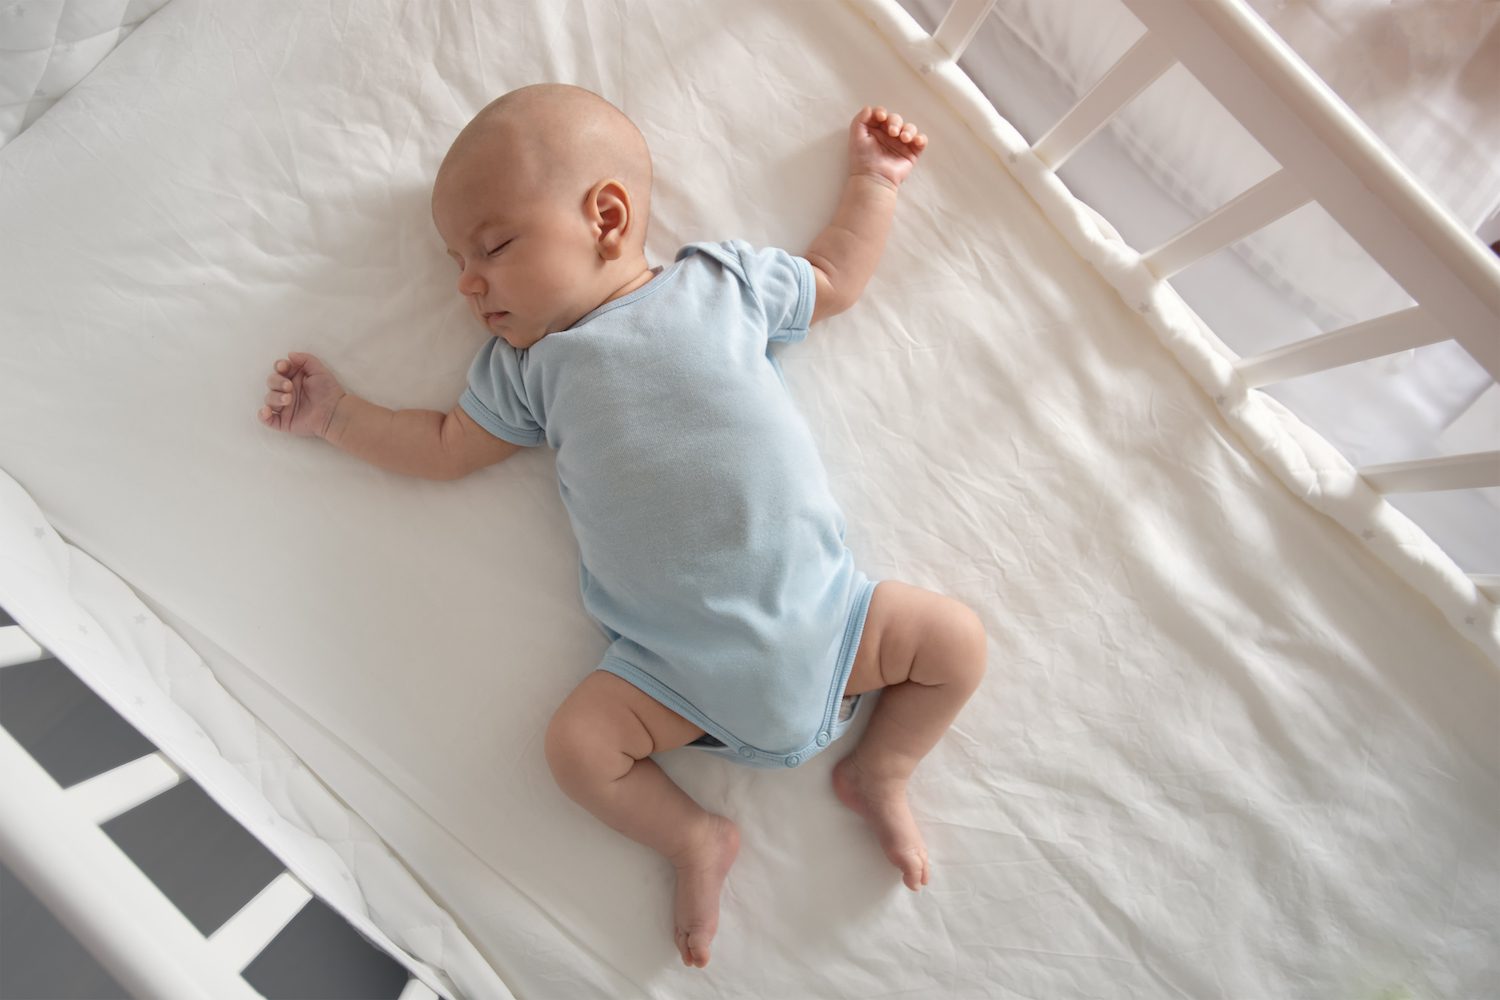 Infant sleeping linked to obesity risk